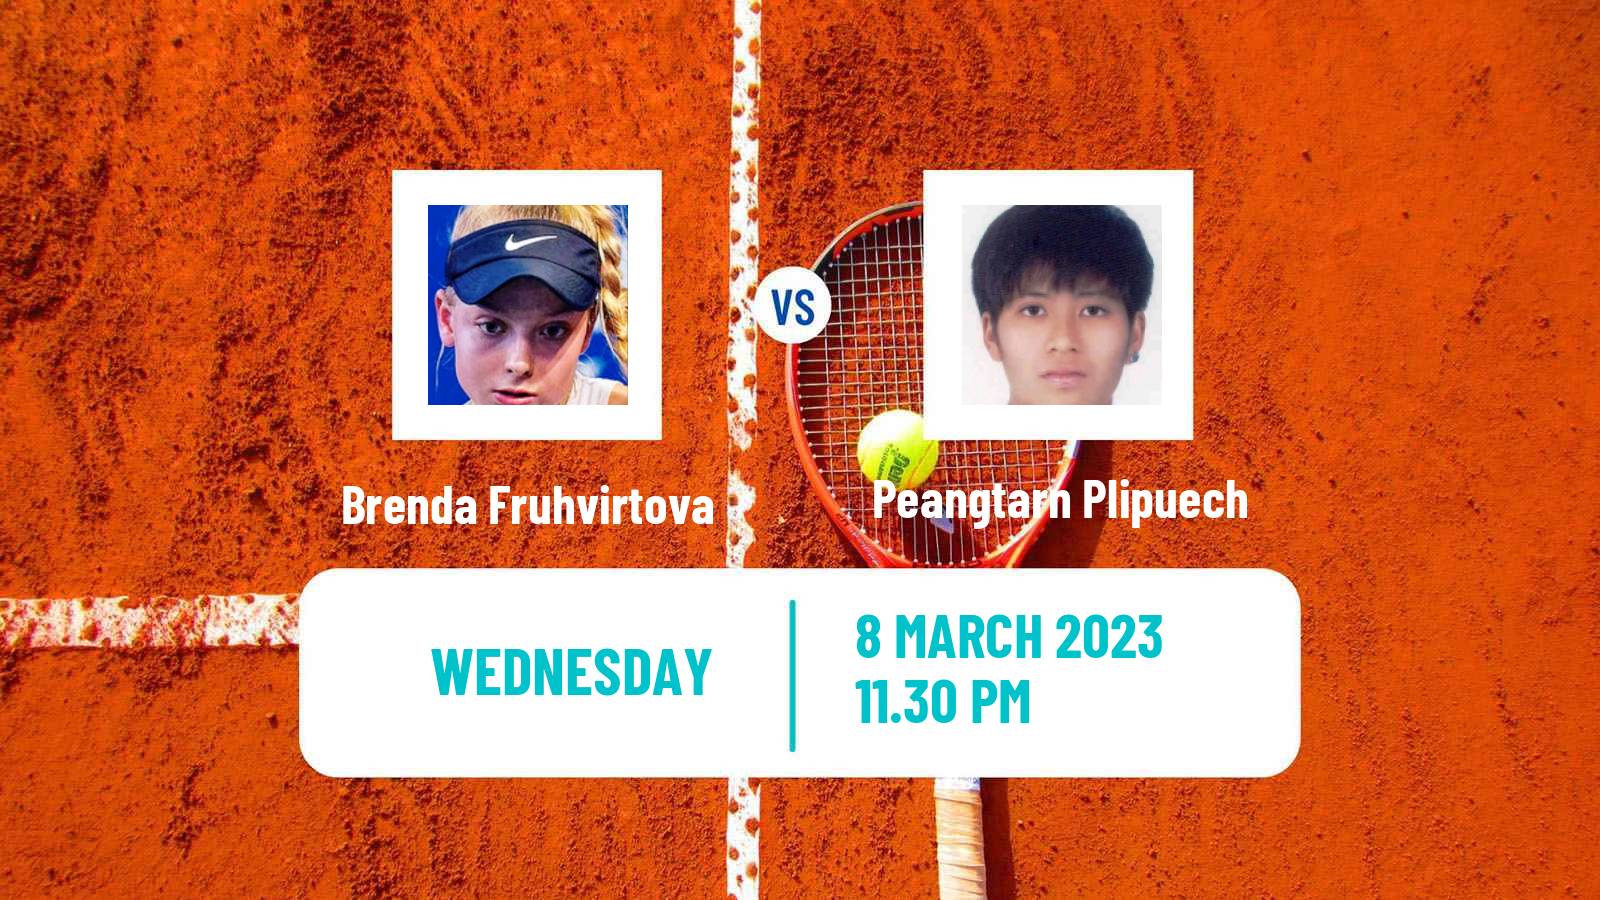 Tennis ITF Tournaments Brenda Fruhvirtova - Peangtarn Plipuech